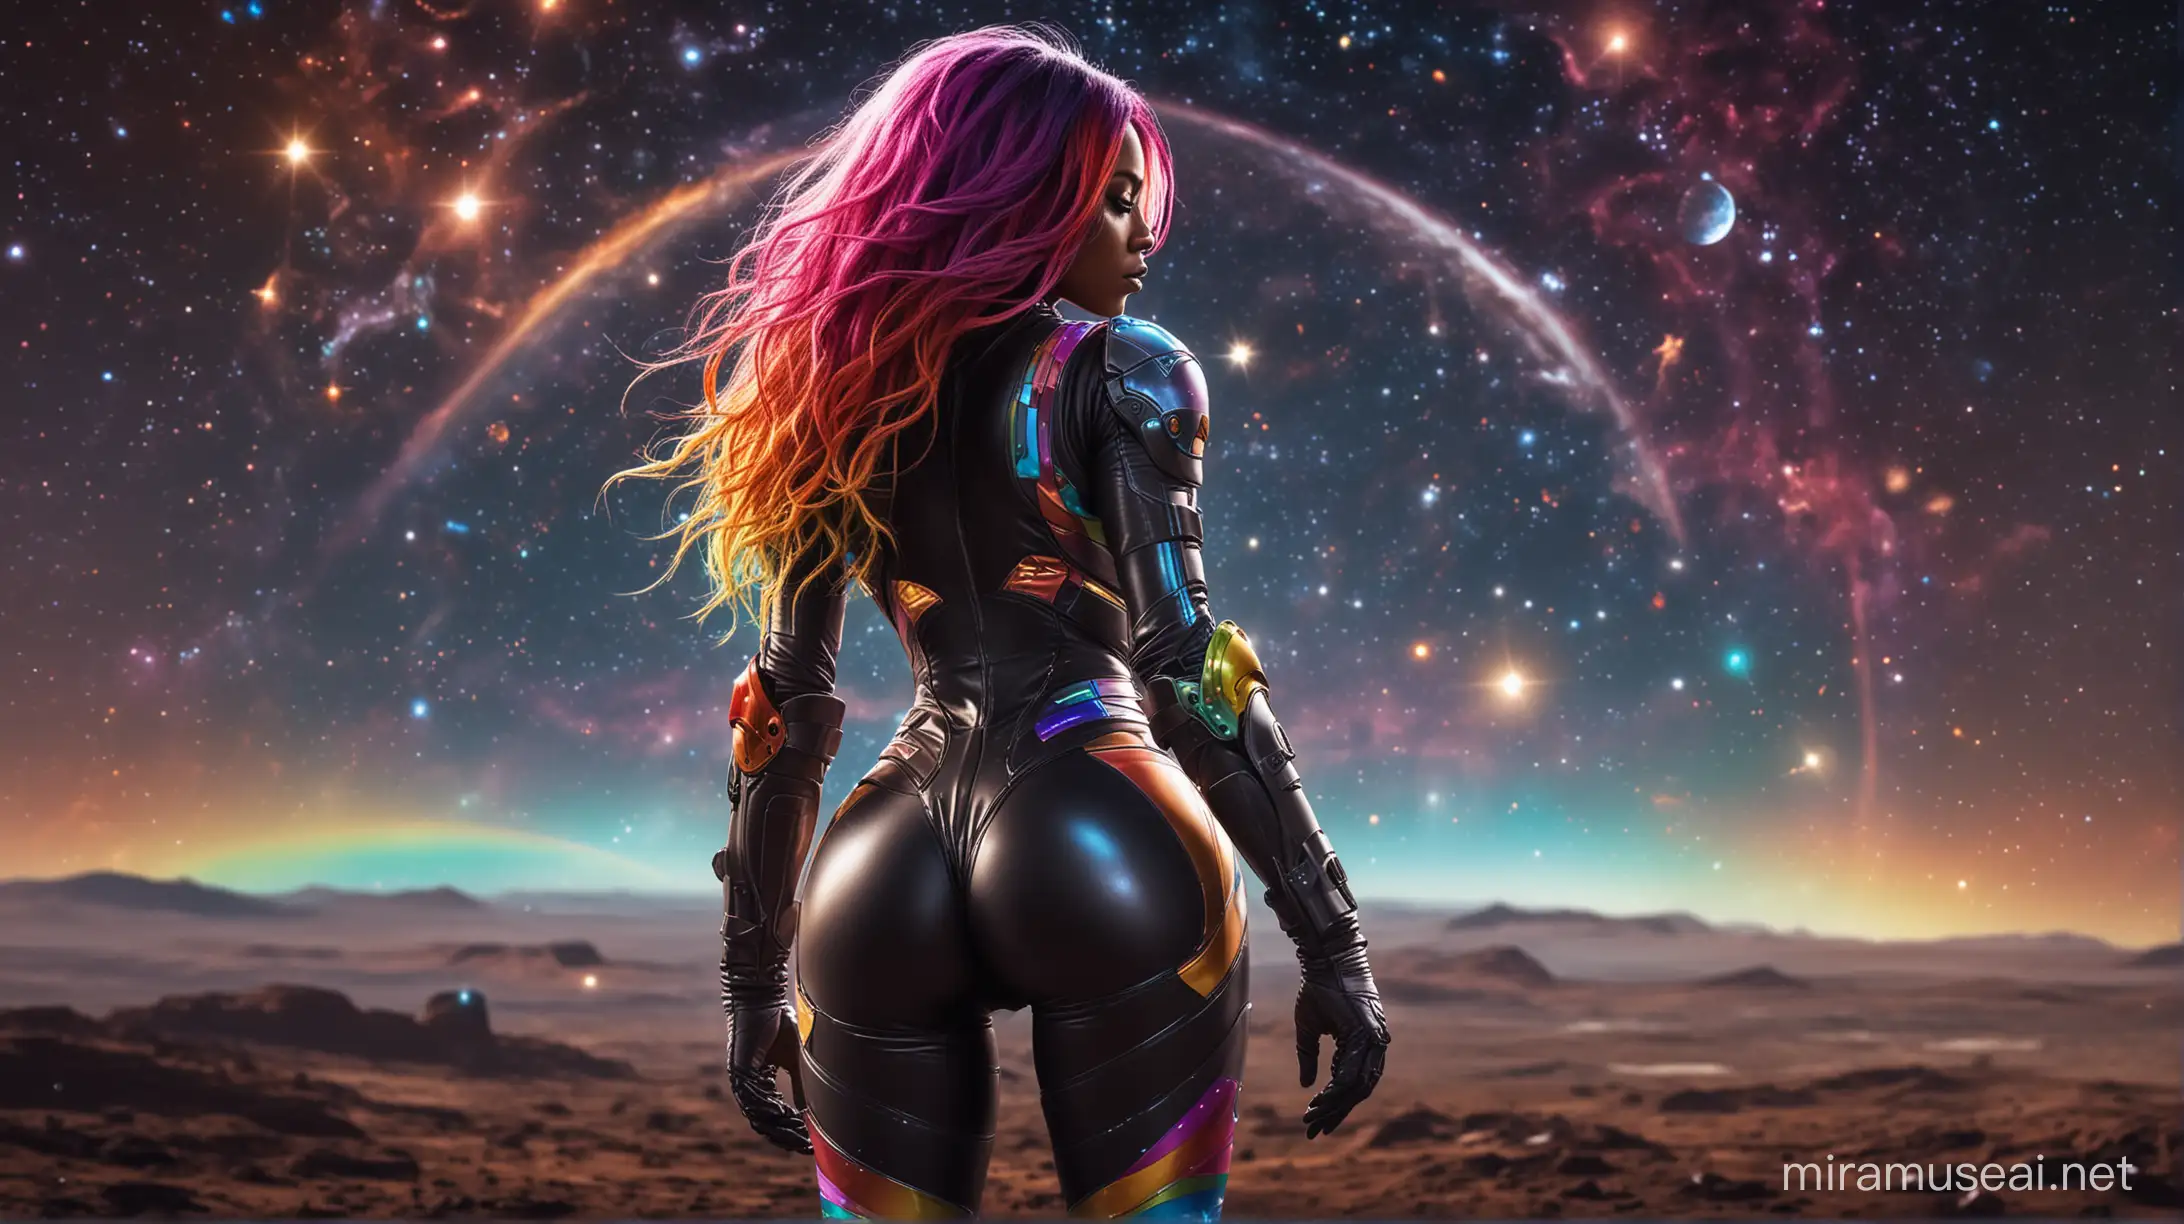 Glowing Spacesuit Beauty Captivating BlackSkinned Woman amidst Cosmic Wonders